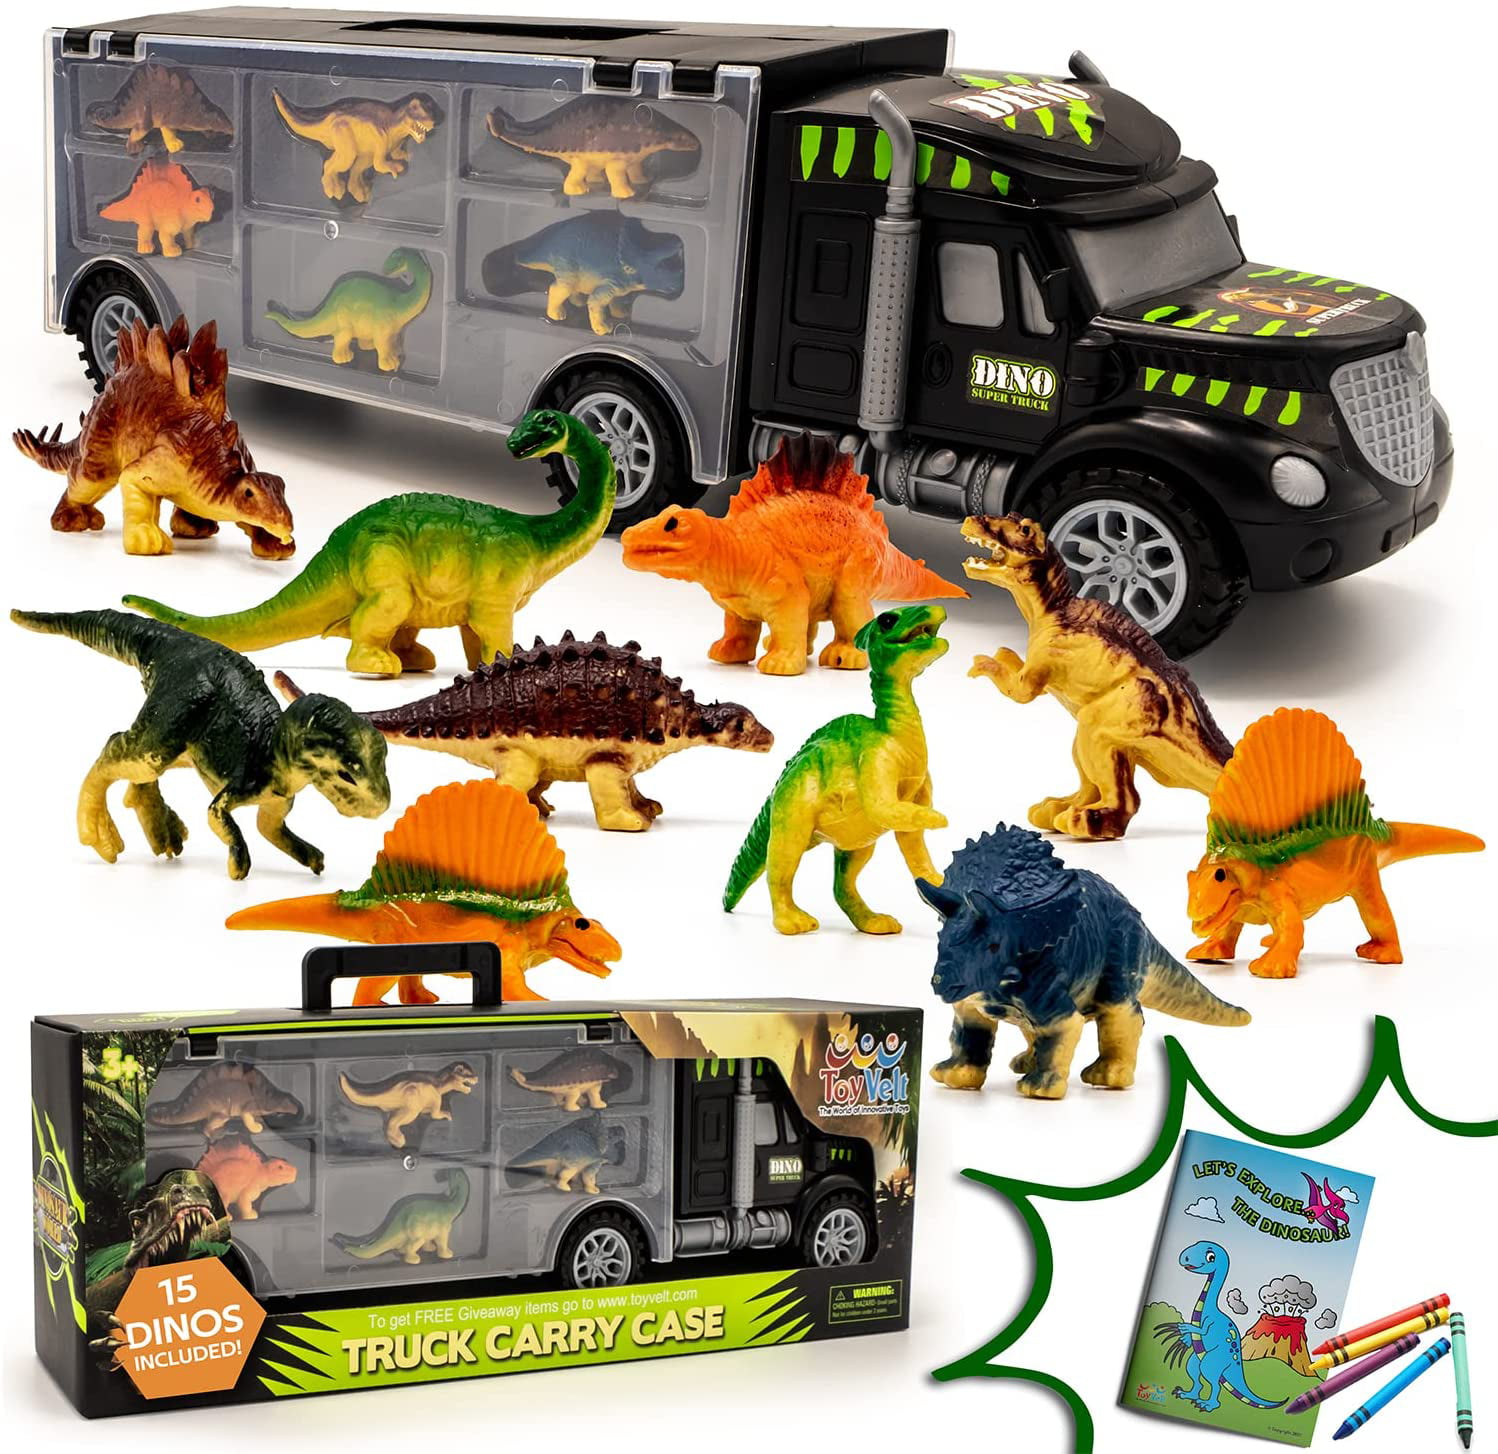 Prextex 16" Tractor Trailer Dinosaur Carrier with 6 Mini Plastic Dinosaurs 